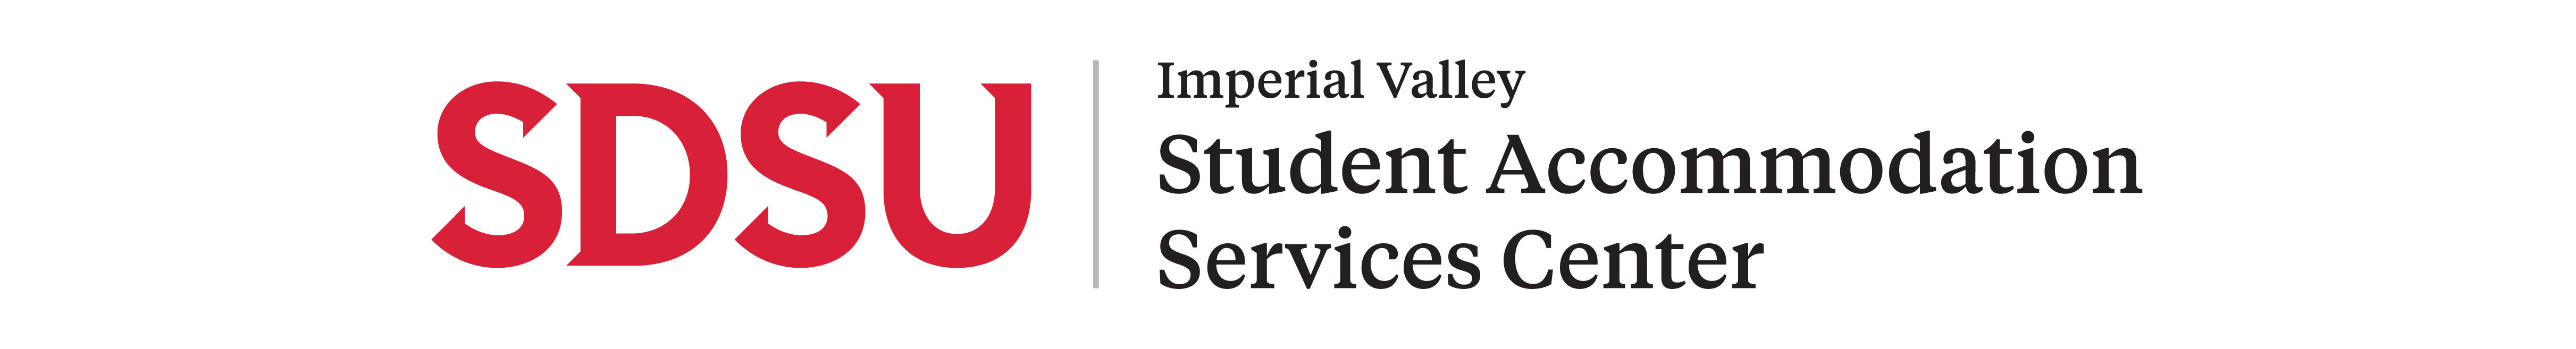 Student Accommodation Services Center logo